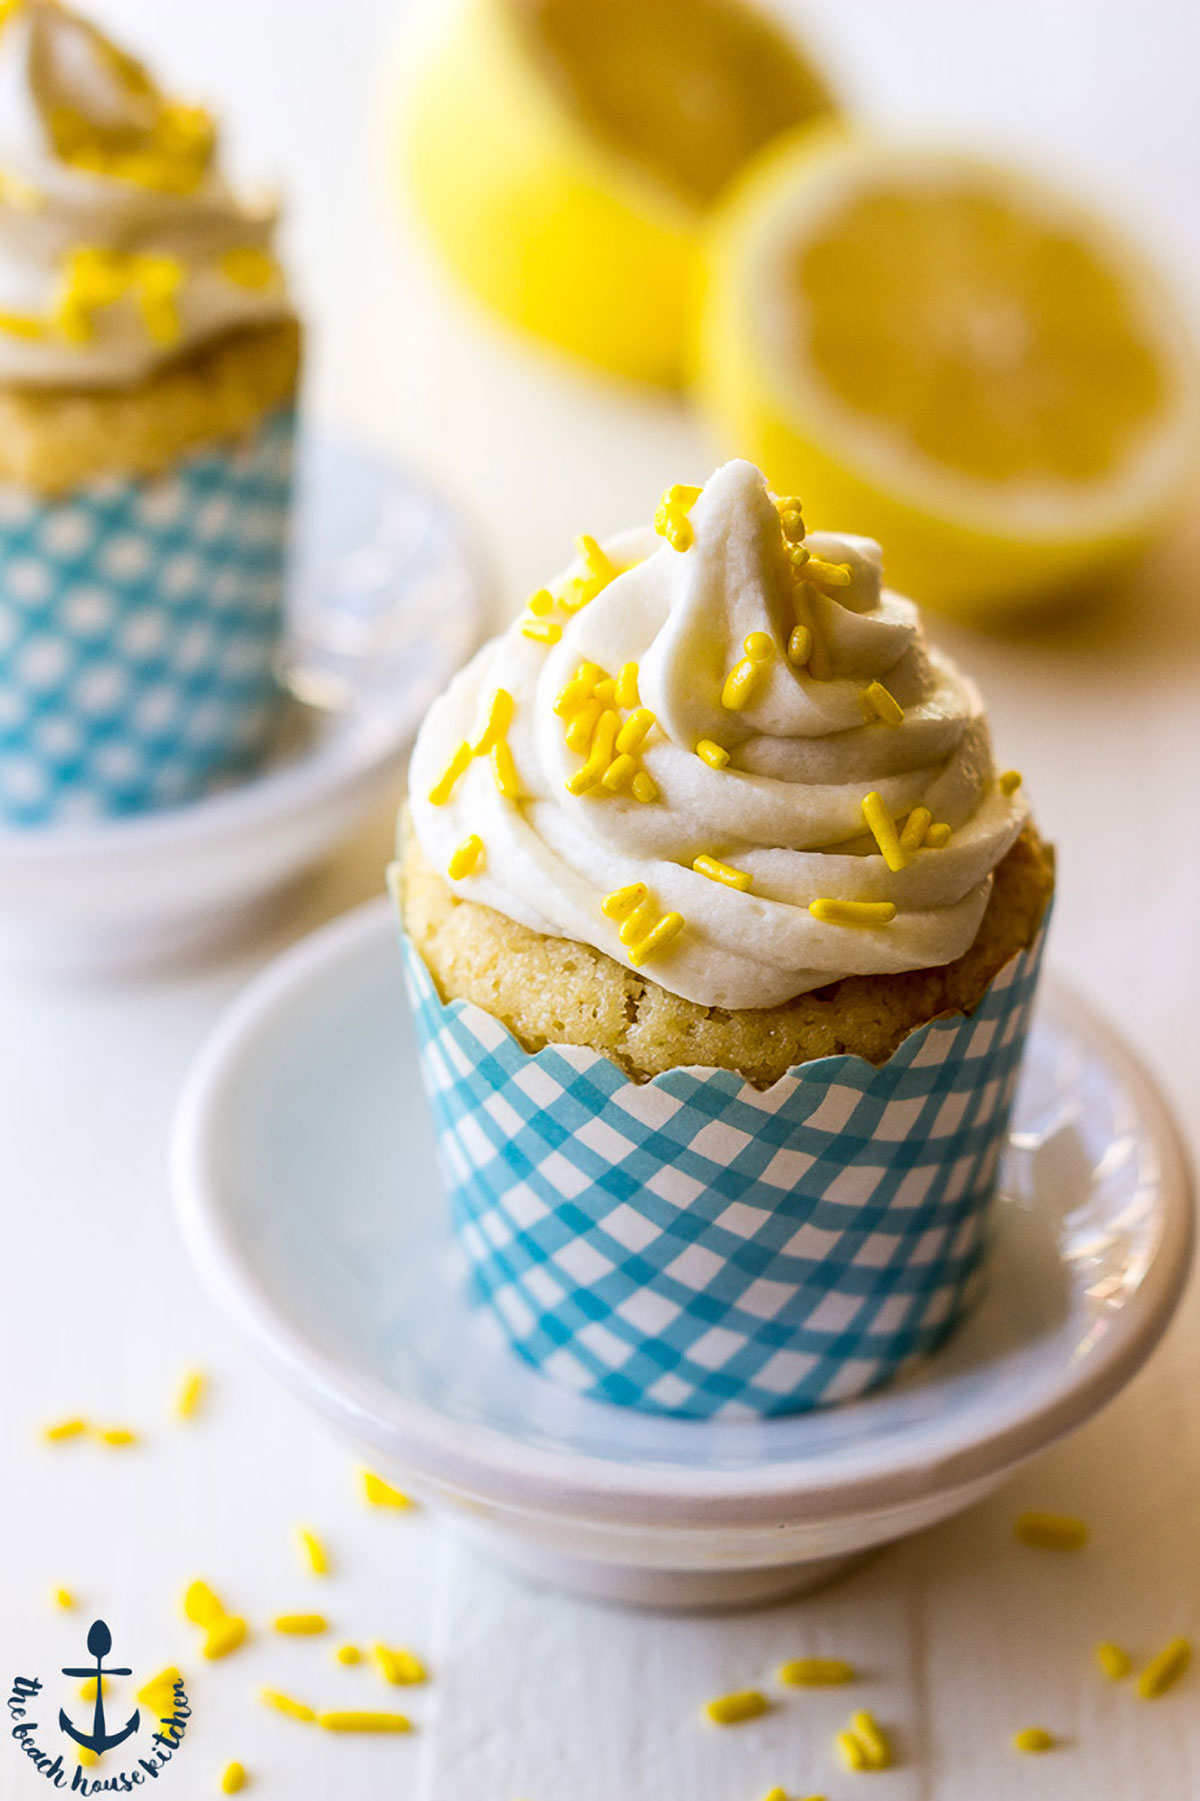 Lemon Cupcakes Filled With Lemon Curd